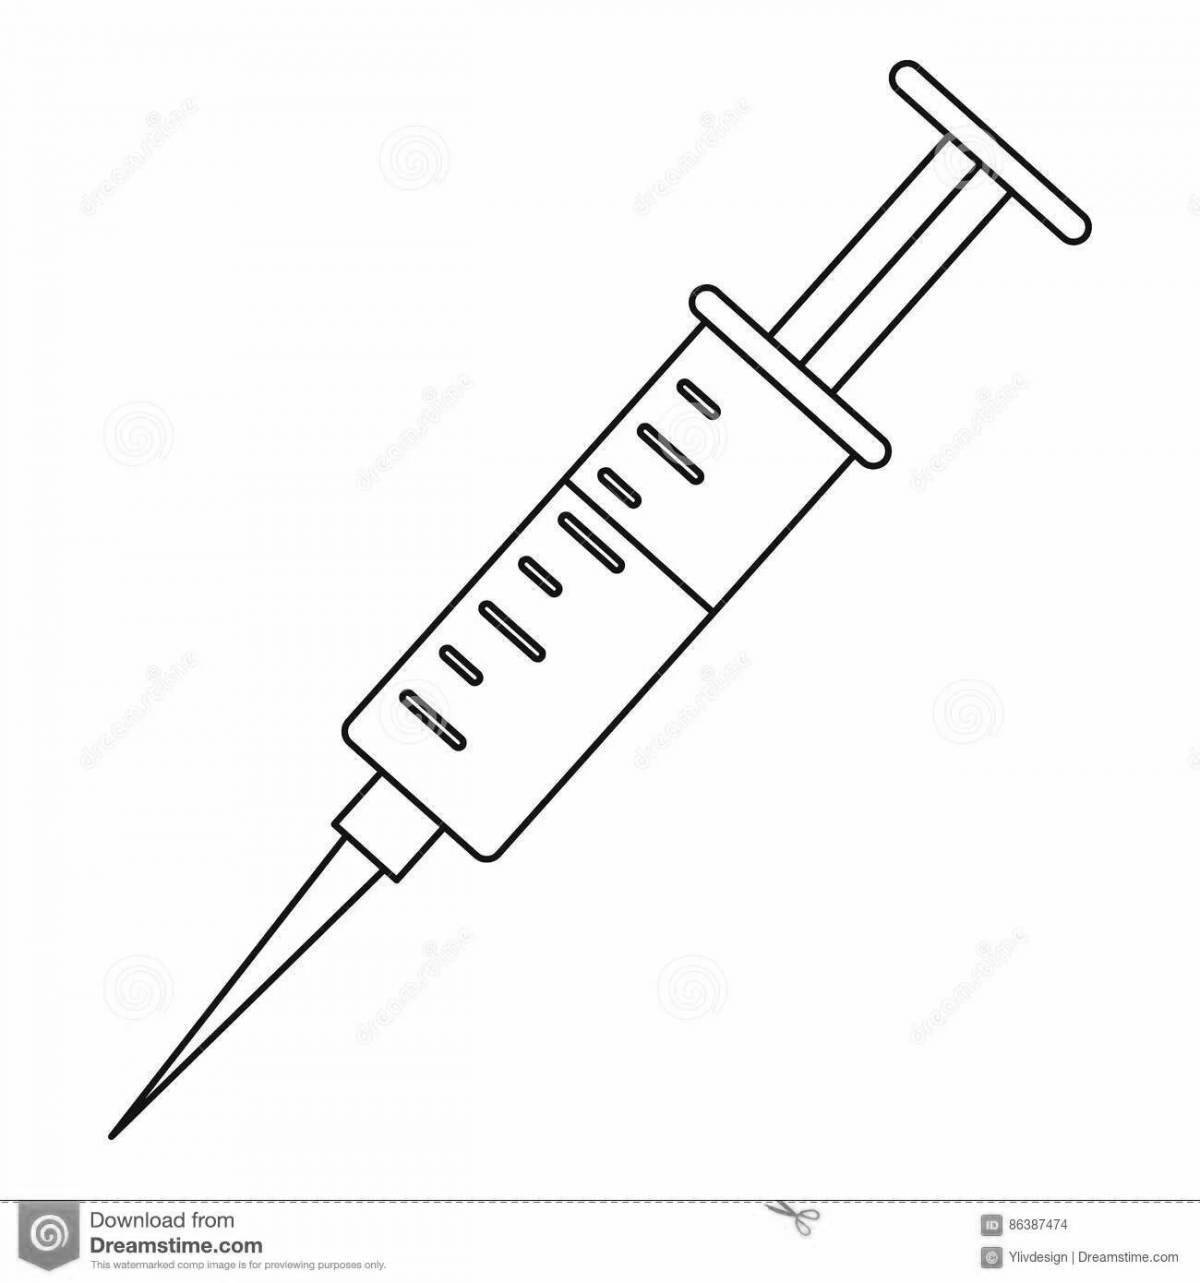 Coloring page joyful syringe with a needle